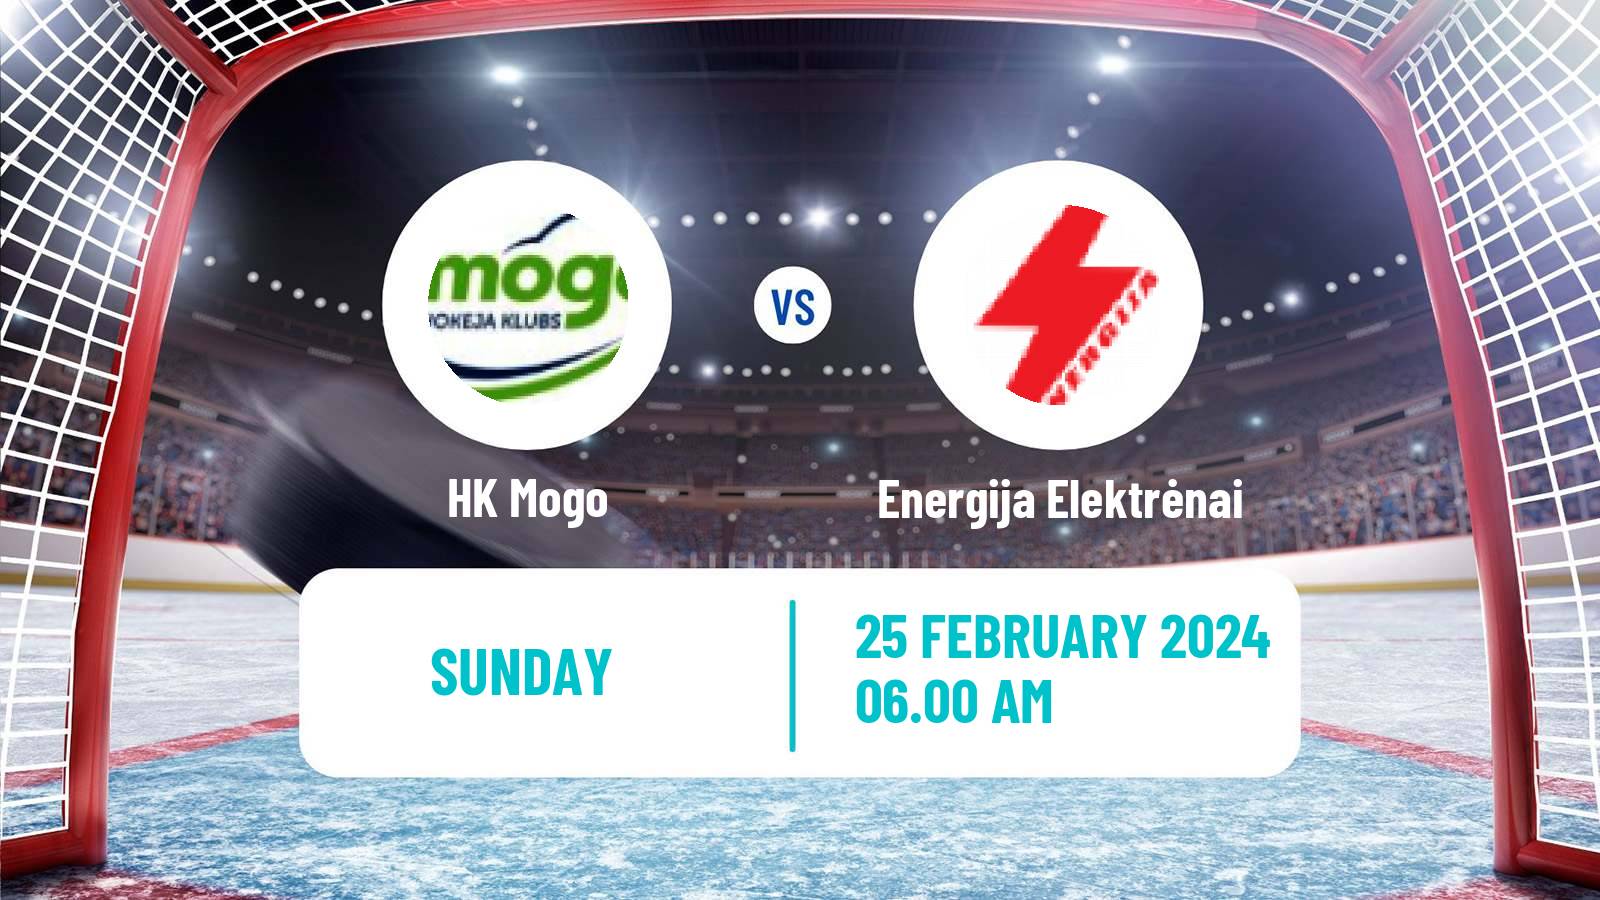 Hockey Latvian Hokeja Liga Mogo - Energija Elektrėnai